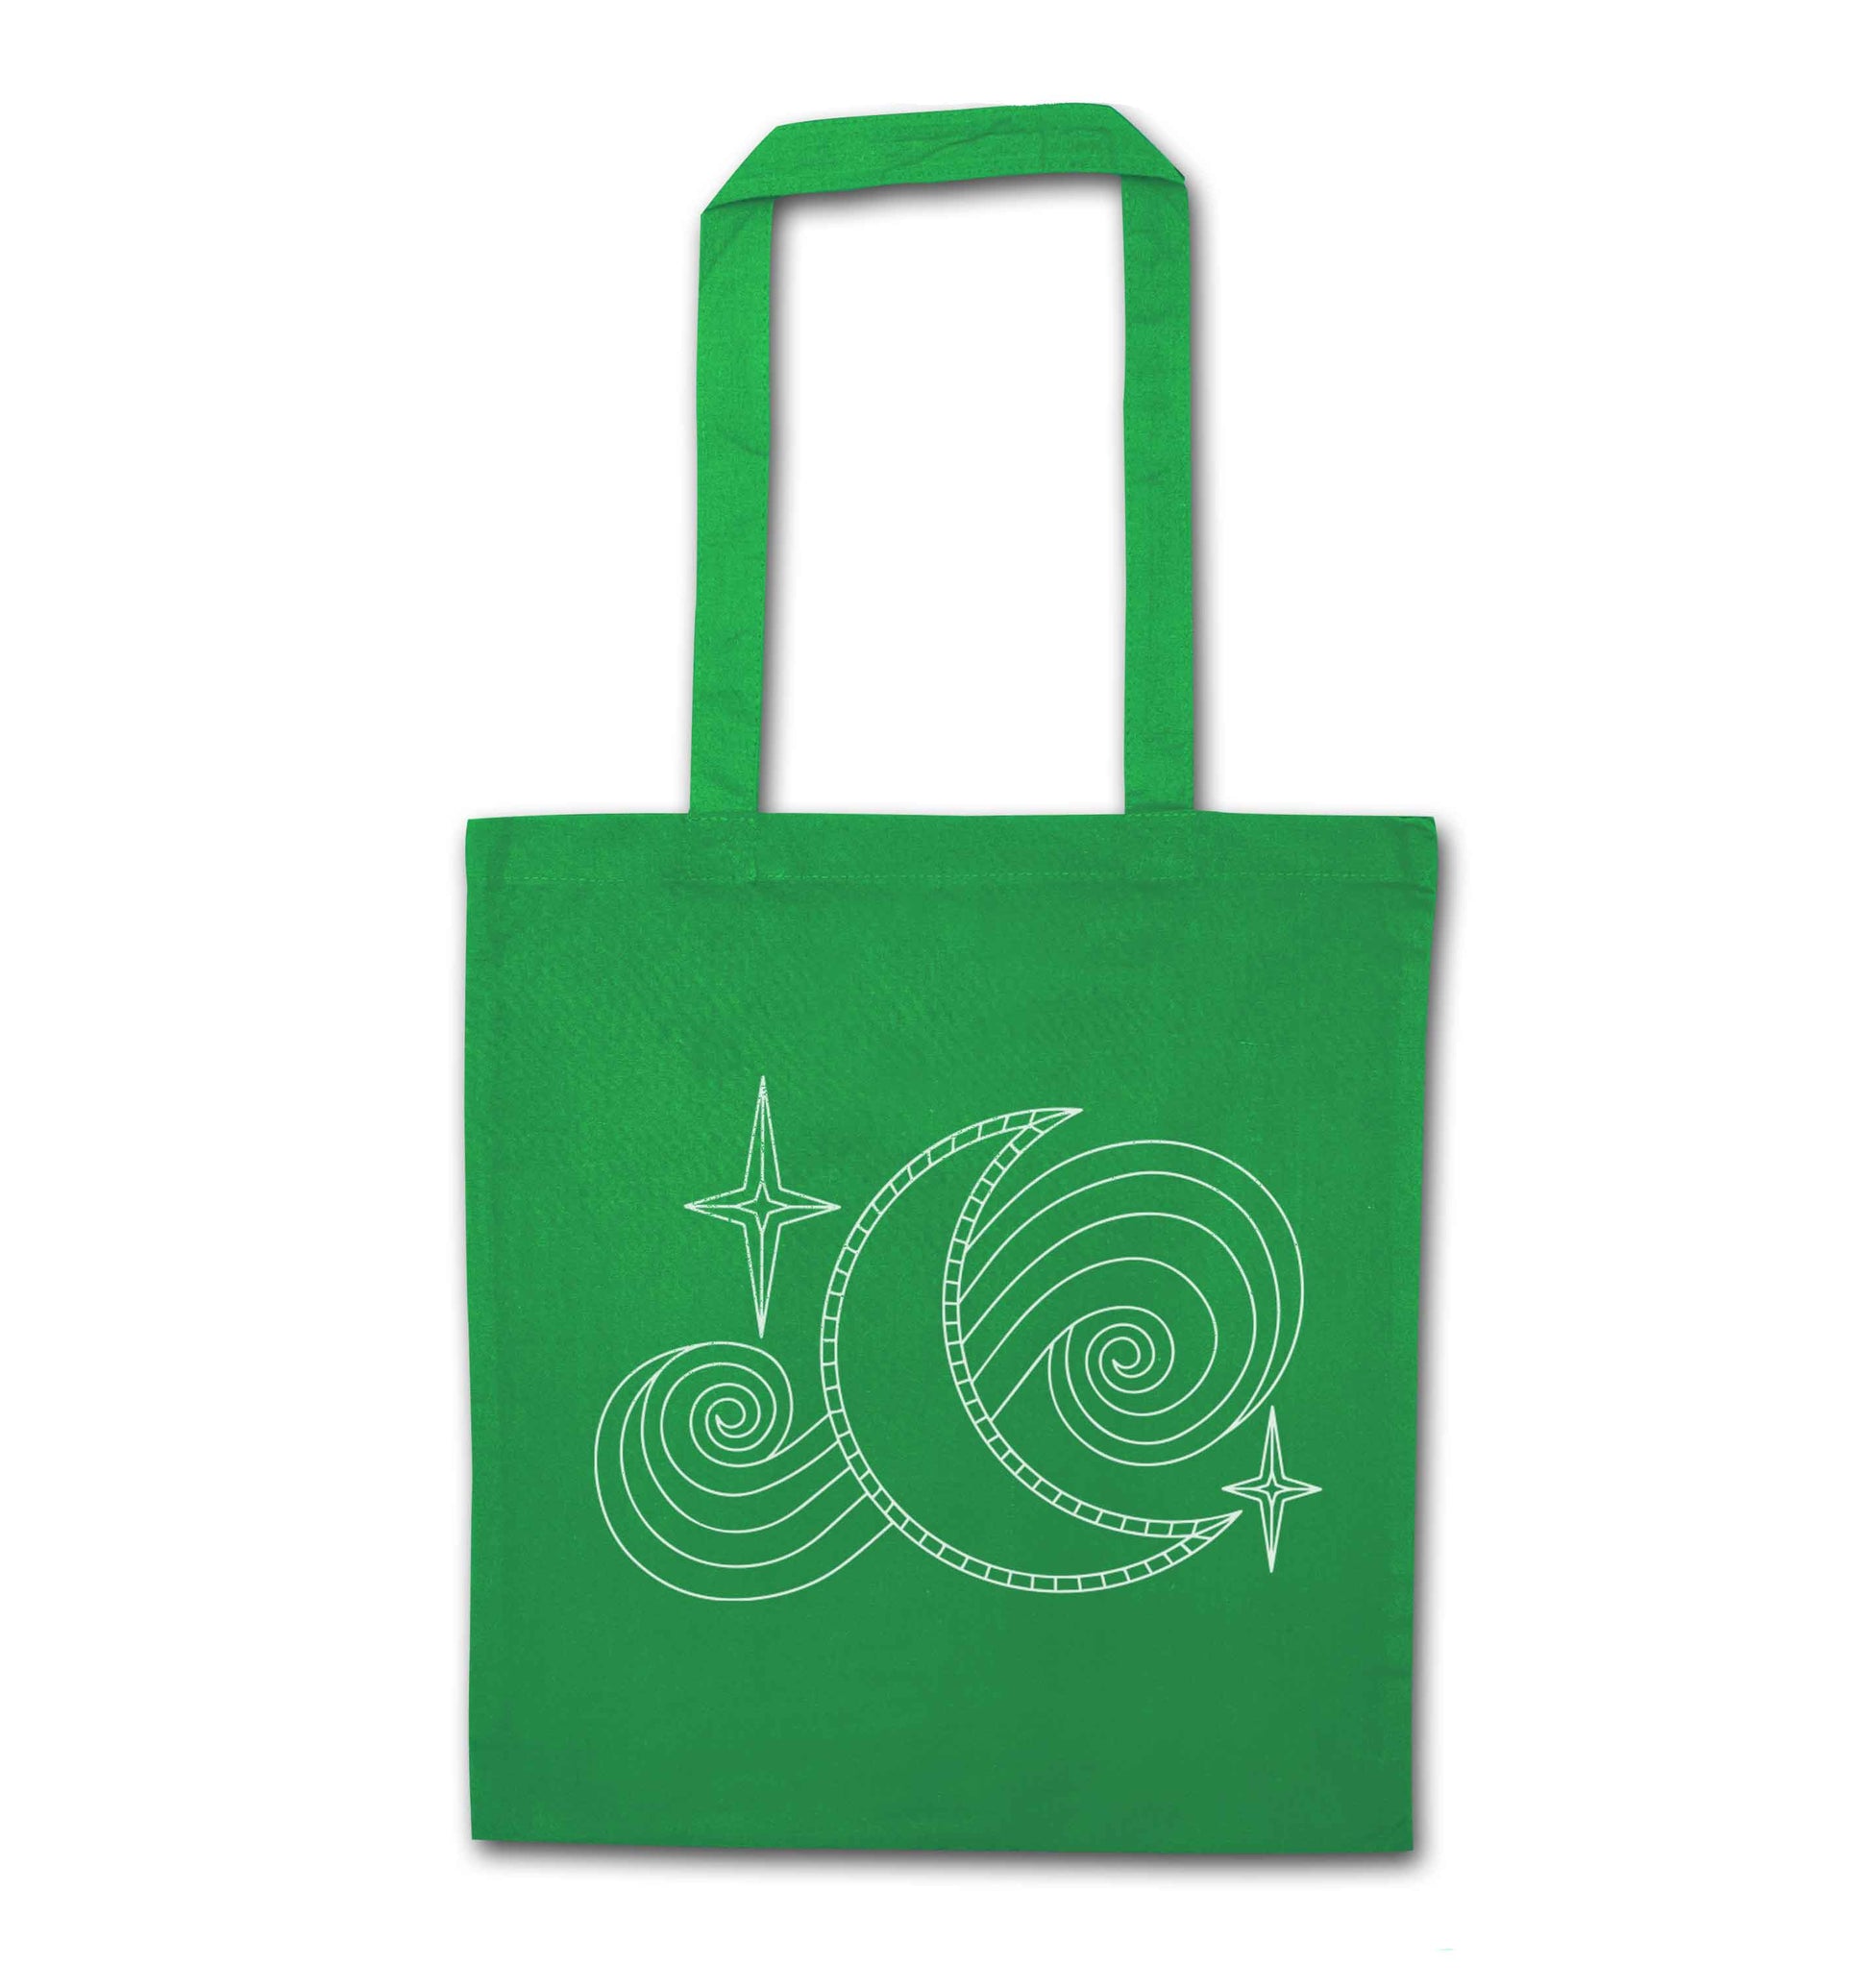 Moon and stars illustration green tote bag